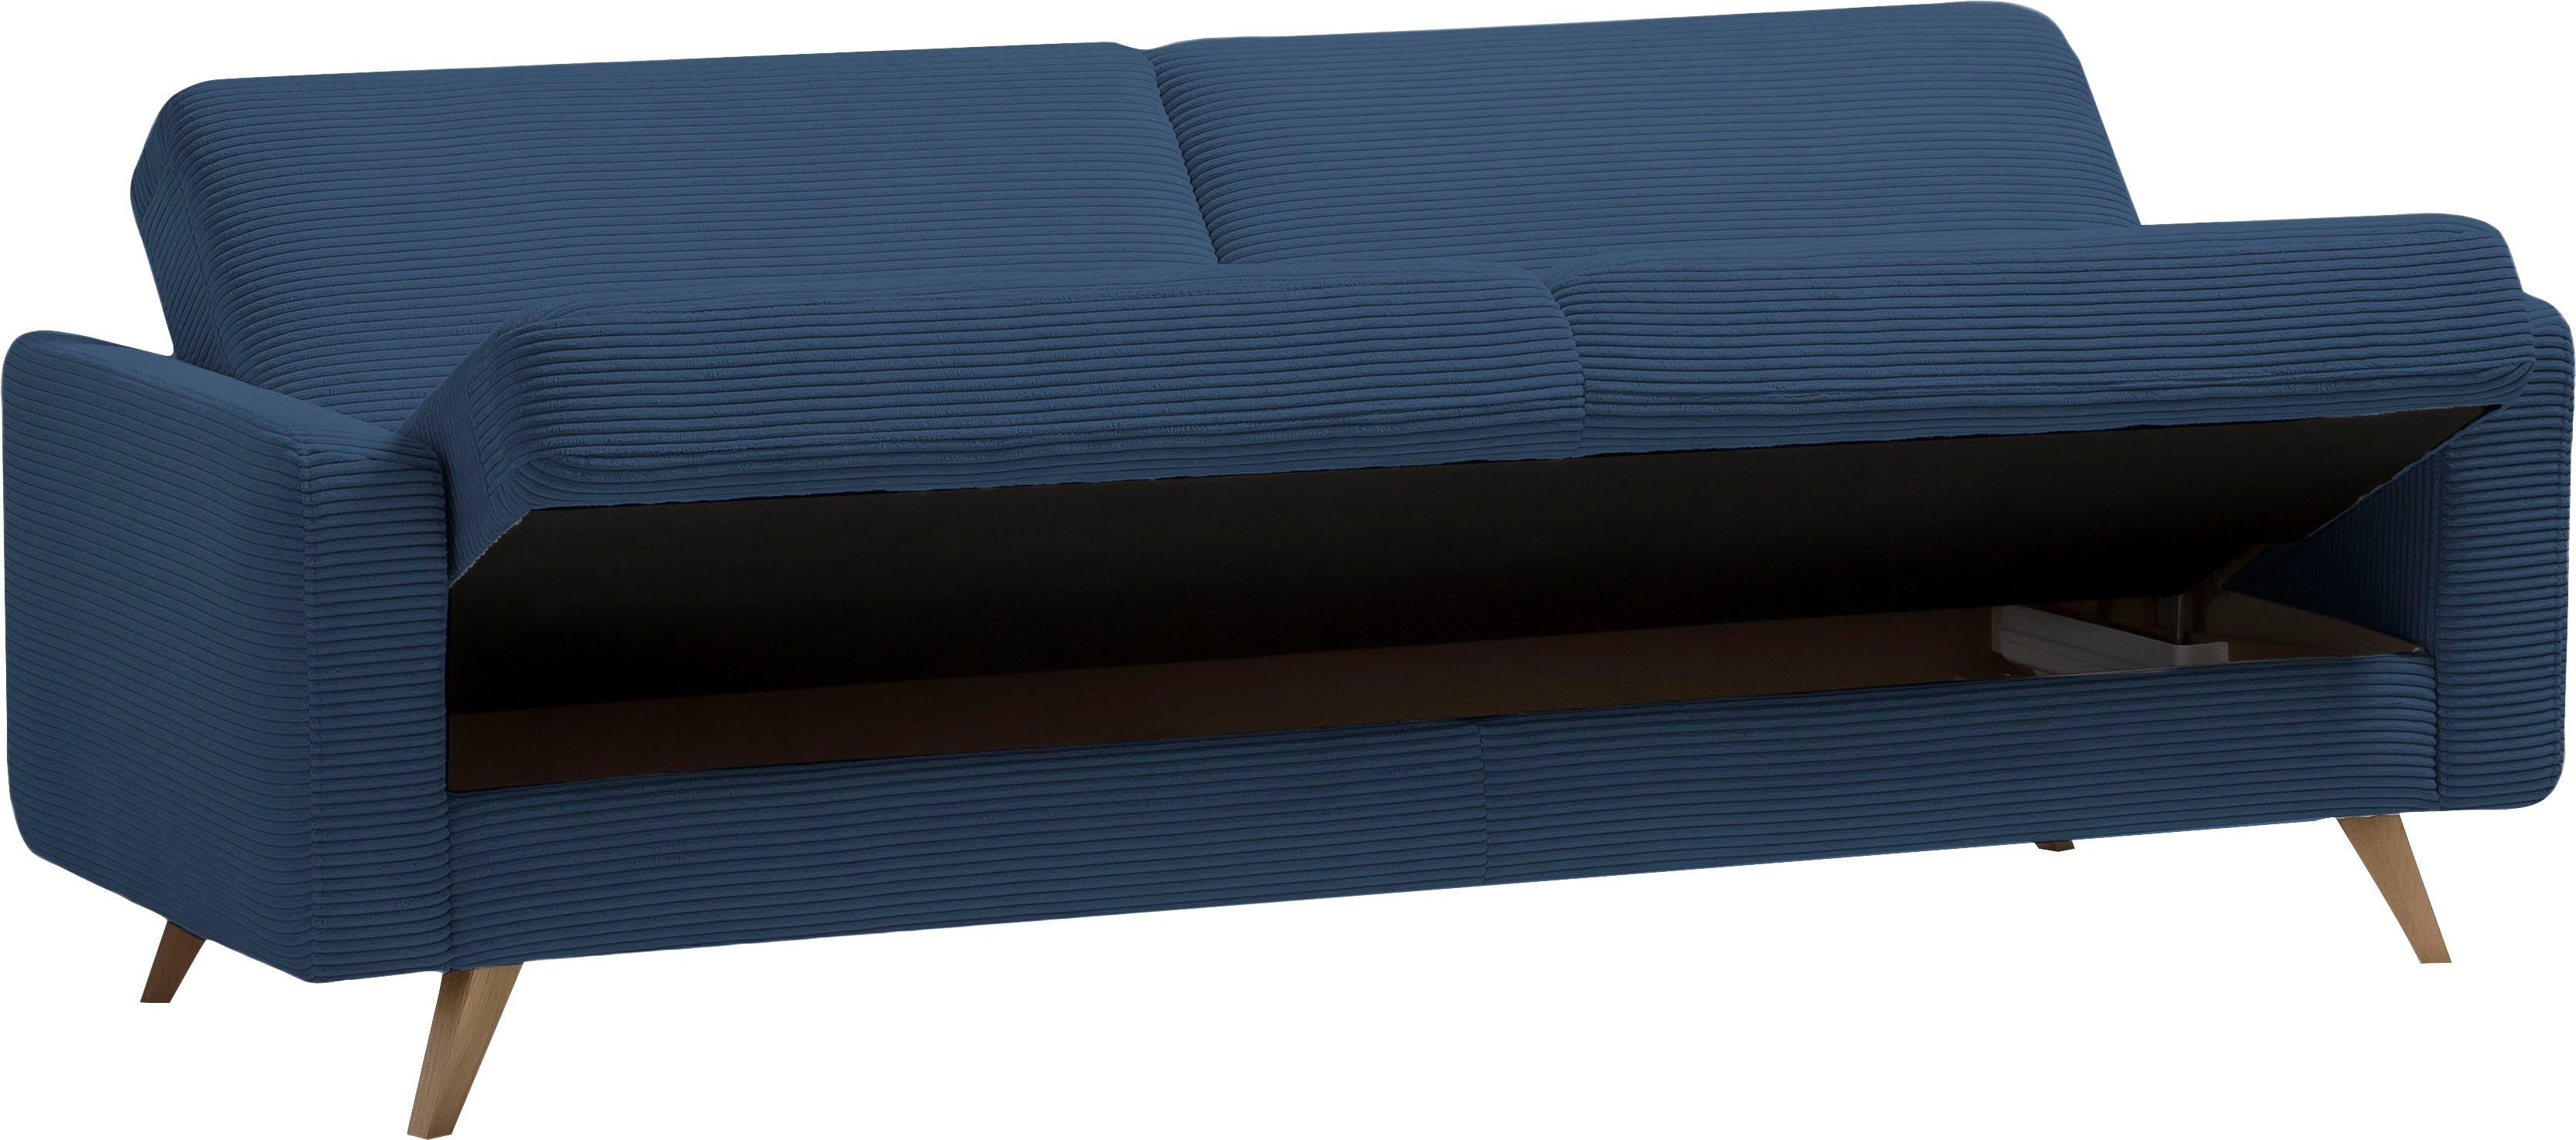 und Bettfunktion Inklusive navy sofa exxpo 3-Sitzer Bettkasten - Samso, fashion